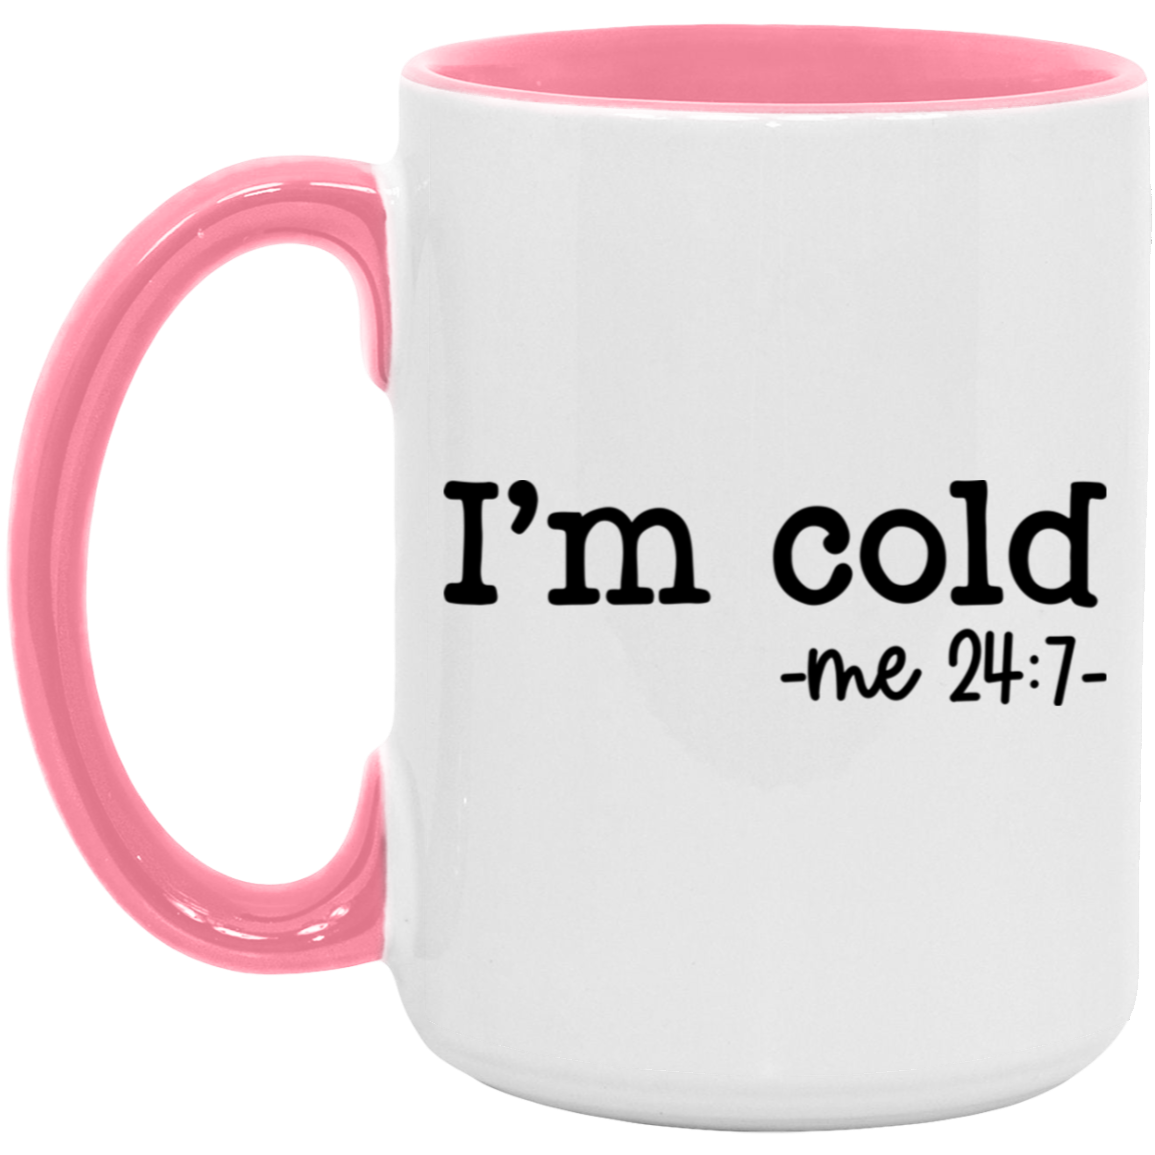 I'm Cold -me 24:7 15 oz Coffee Mug